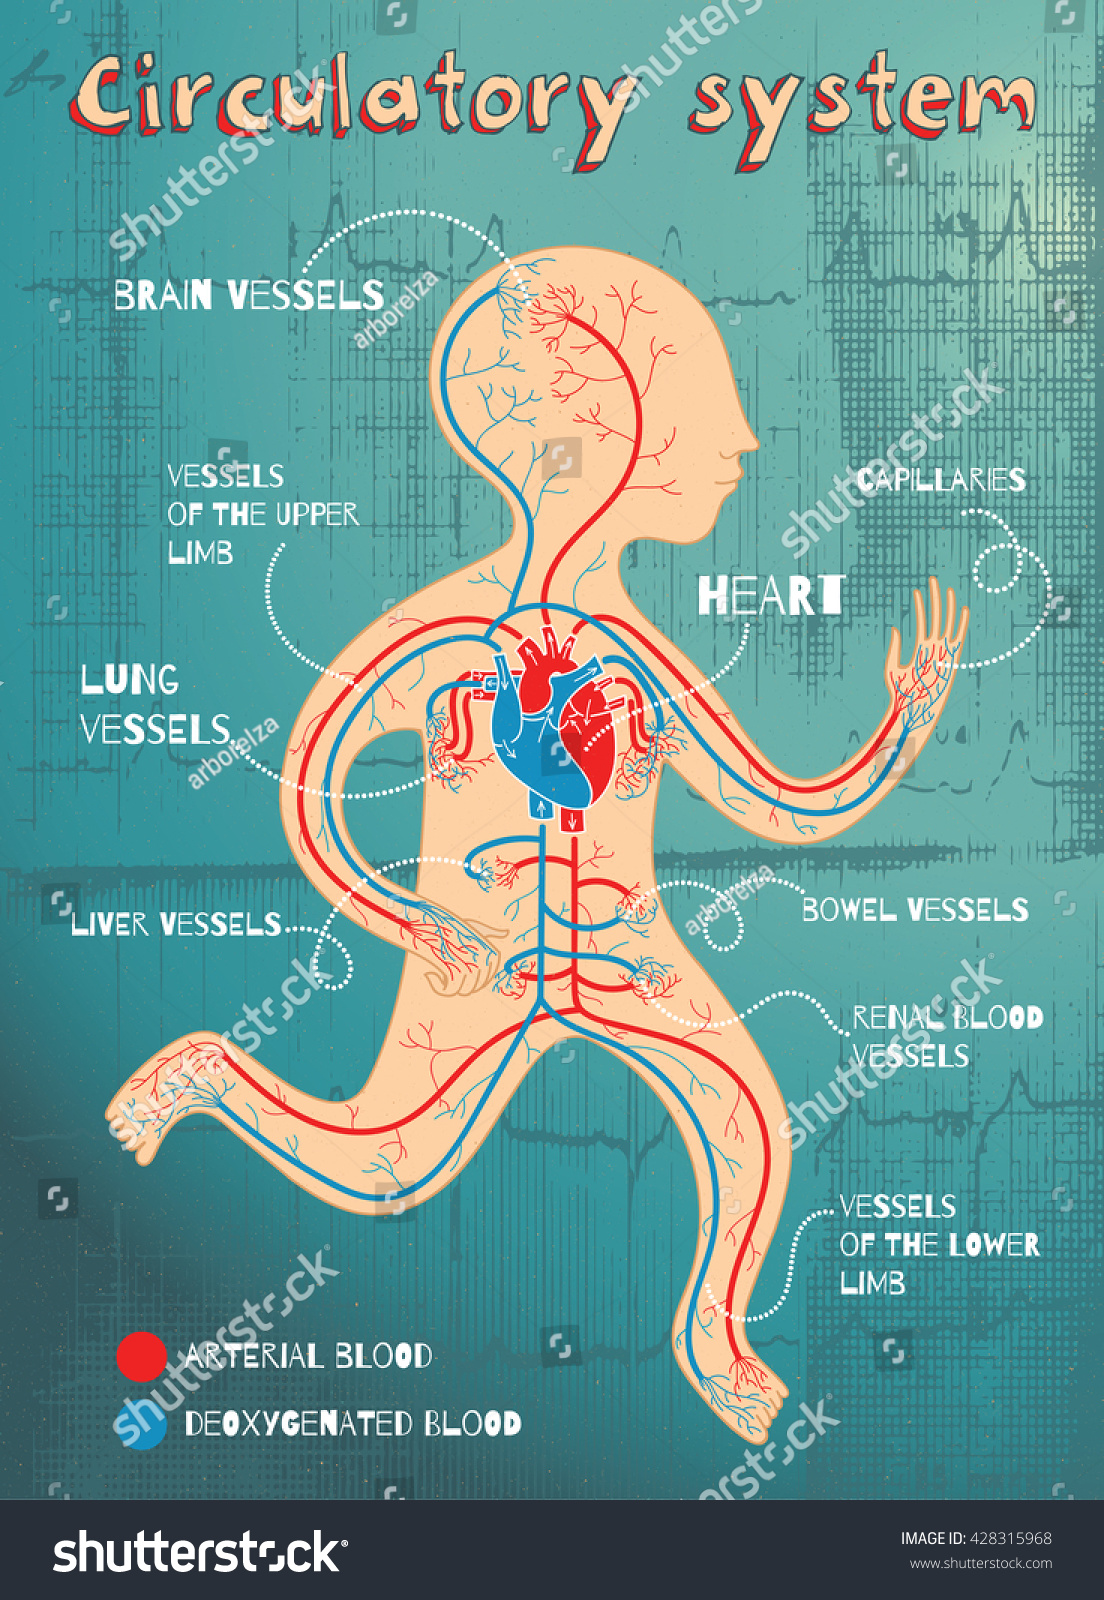 Human circulatory system for kids. Vector color cartoon illustration. Human cardiovascular anatomy scheme.